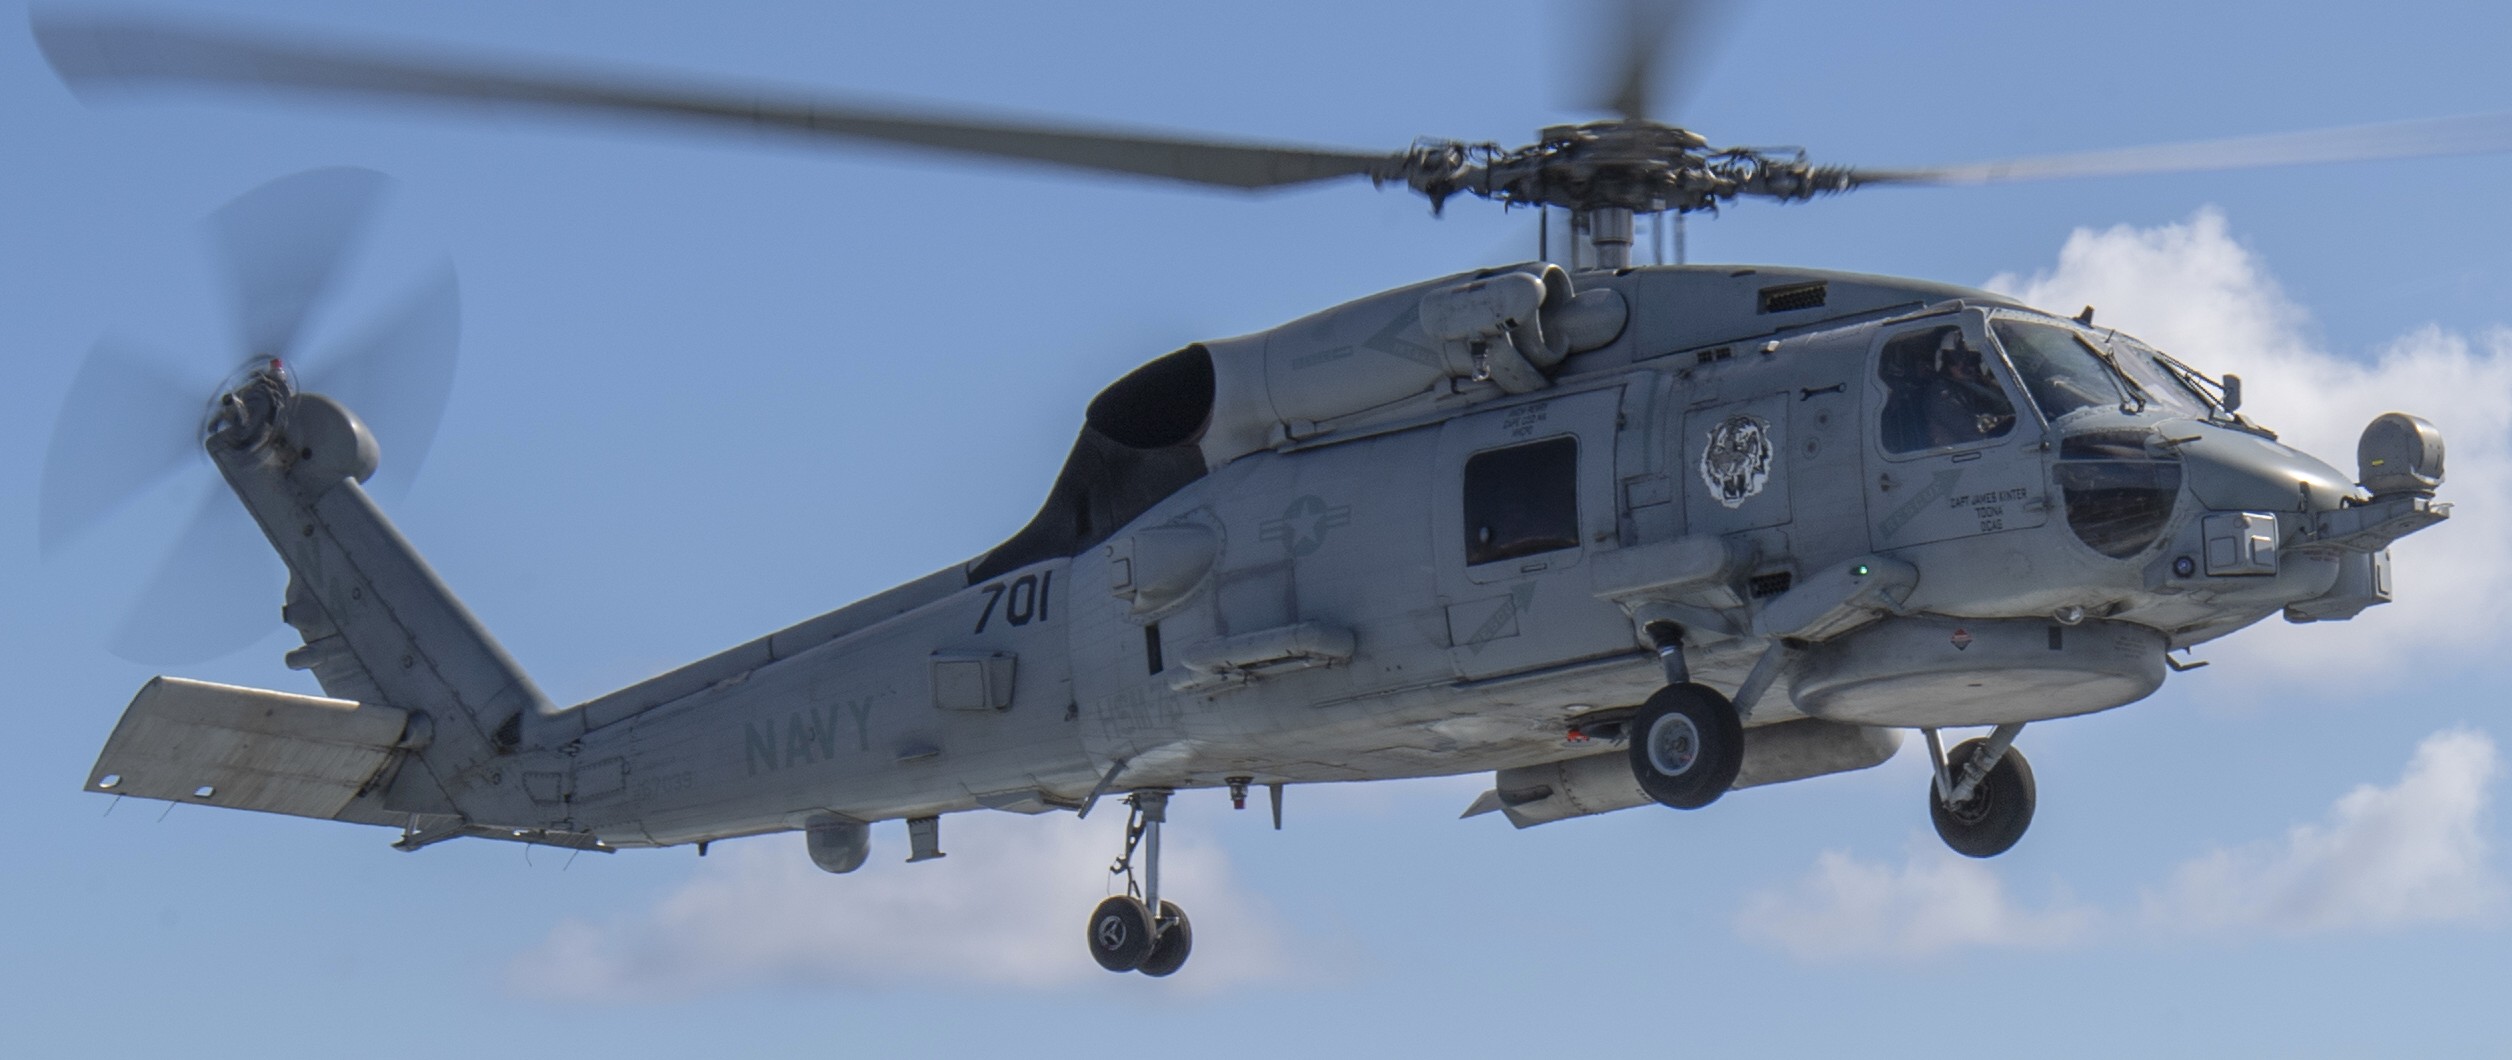 hsm-73 battlecats helicopter maritime strike squadron mh-60r seahawk cvw-17 cvn-68 uss nimitz 93